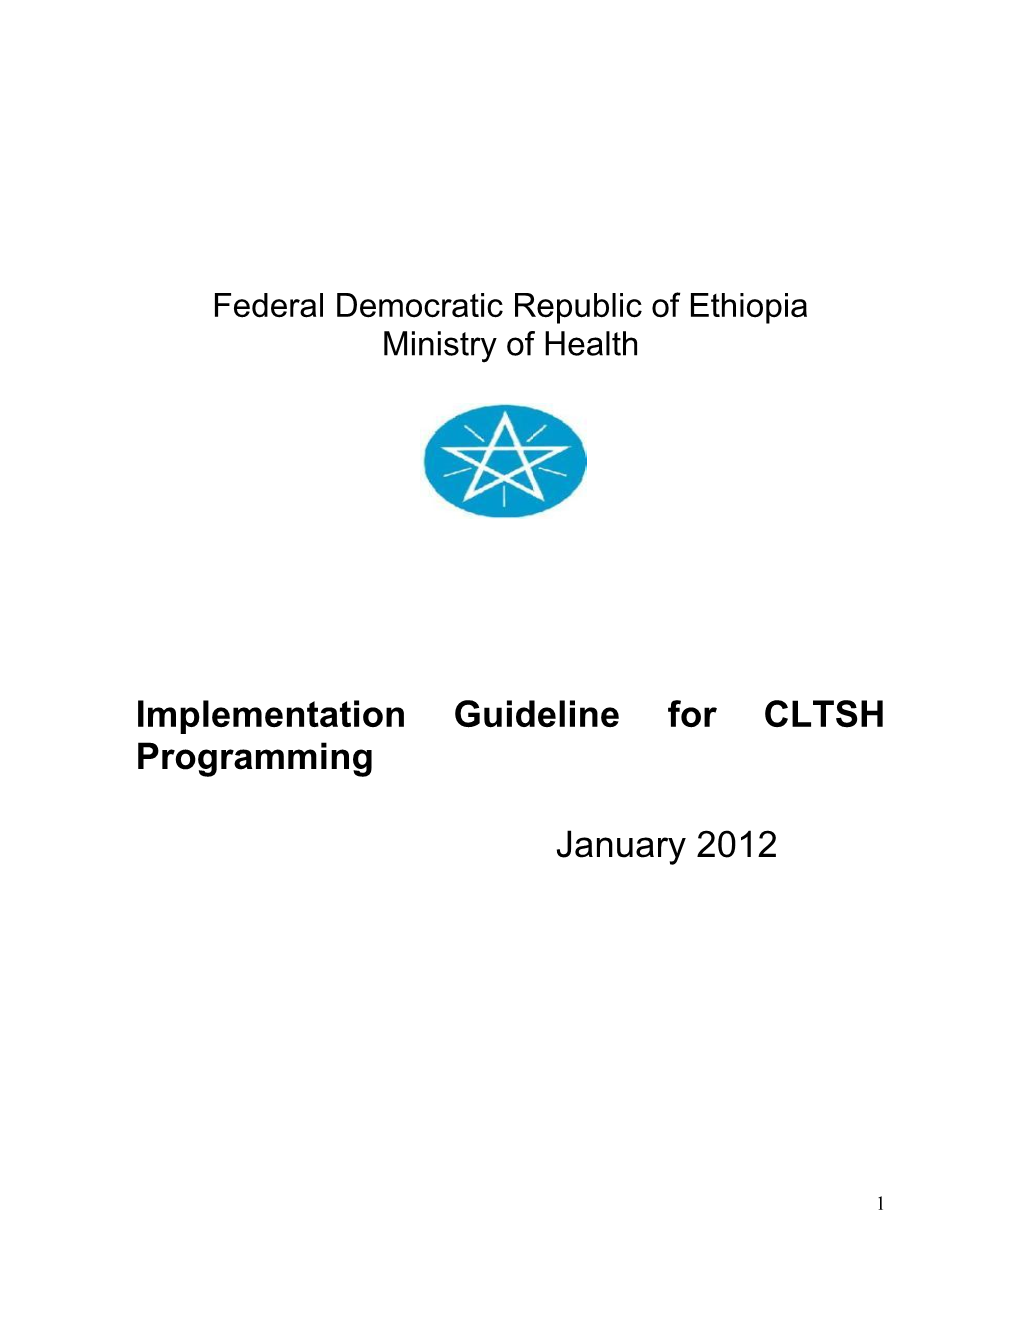 Implementation Guideline for CLTSH Programming January 2012